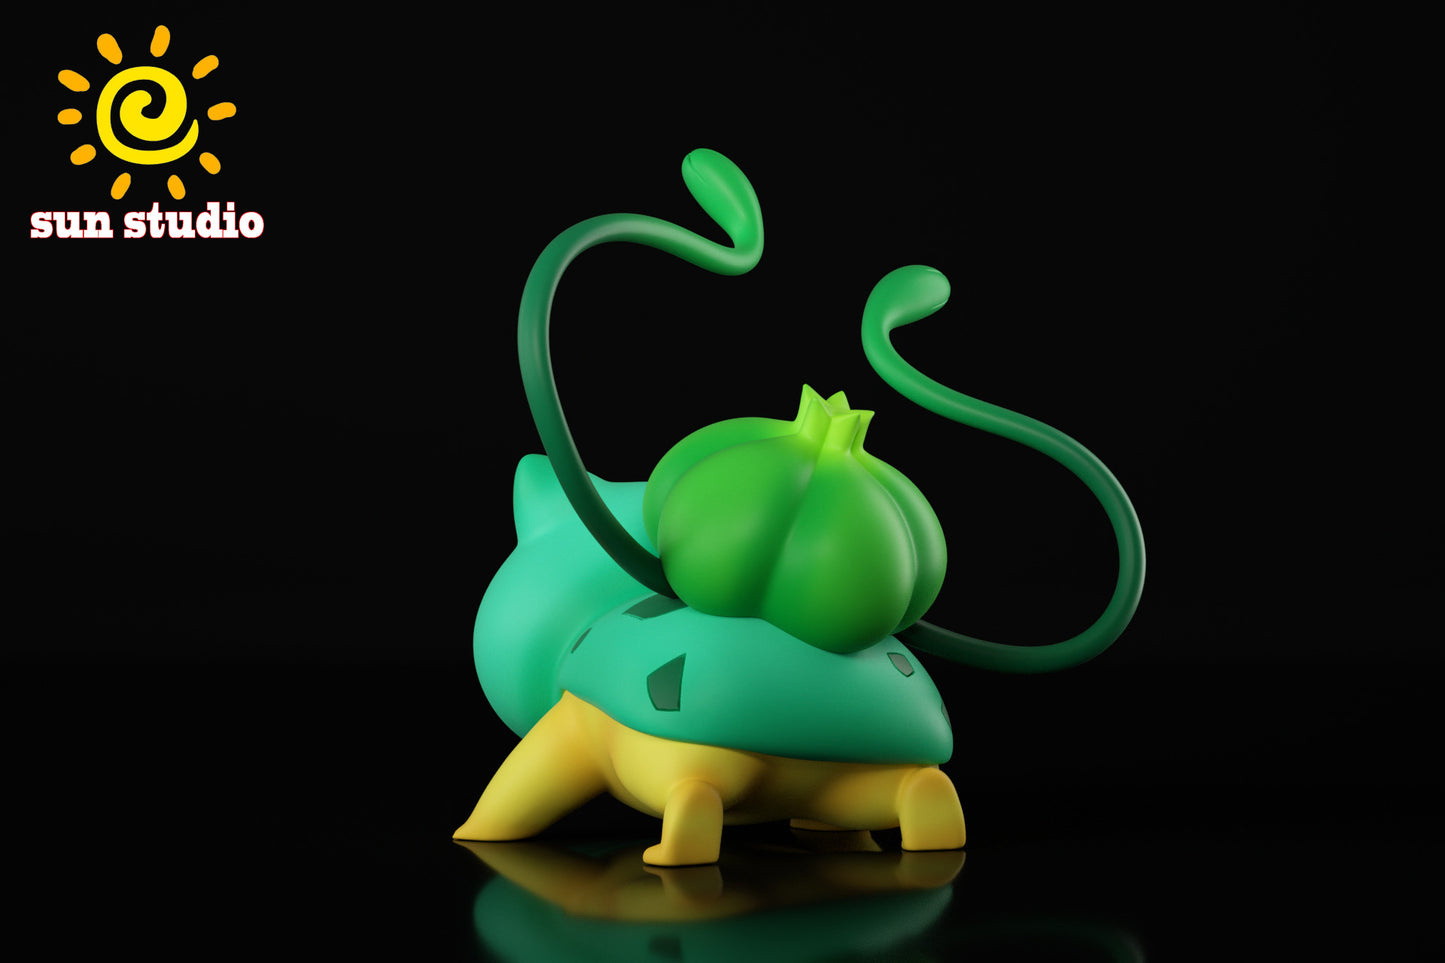 [PREORDER] Pikachu Cosplay [SUN Studio] - Pikachu Cosplay Bulbasaur